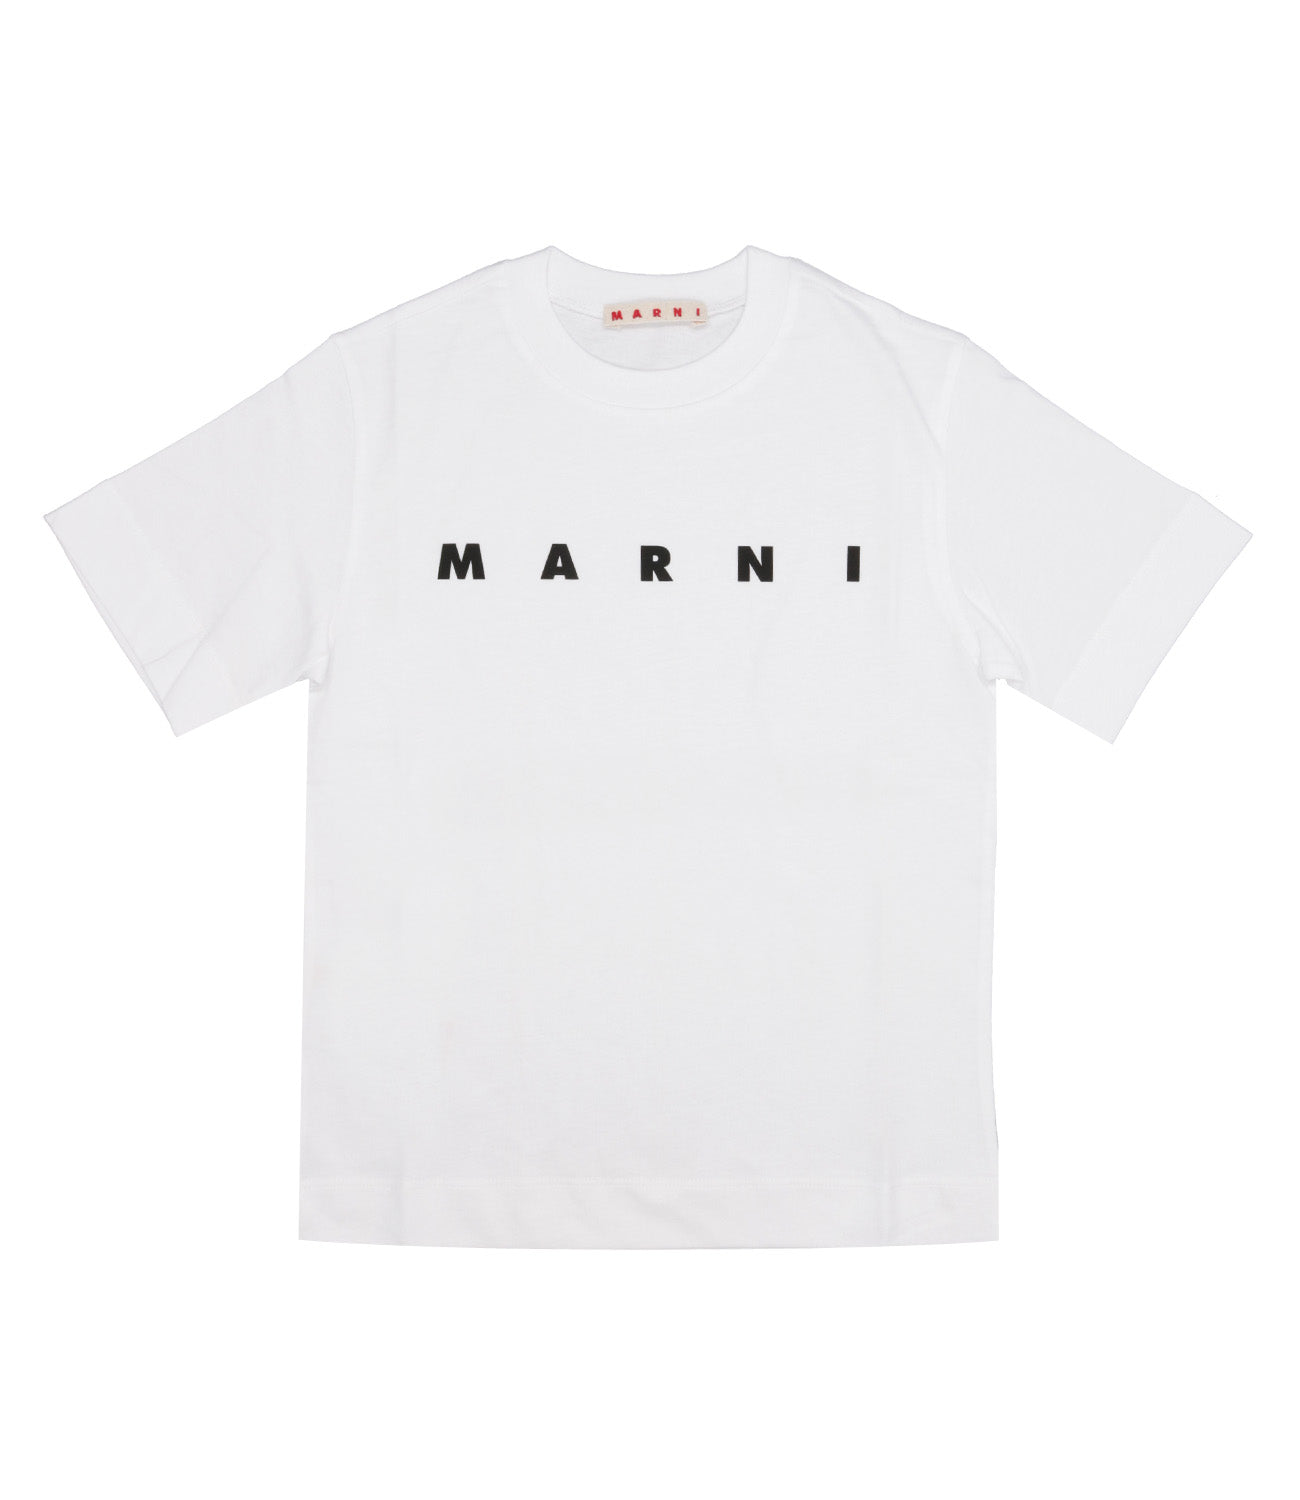 Marni Kids | T-Shirt Bianca